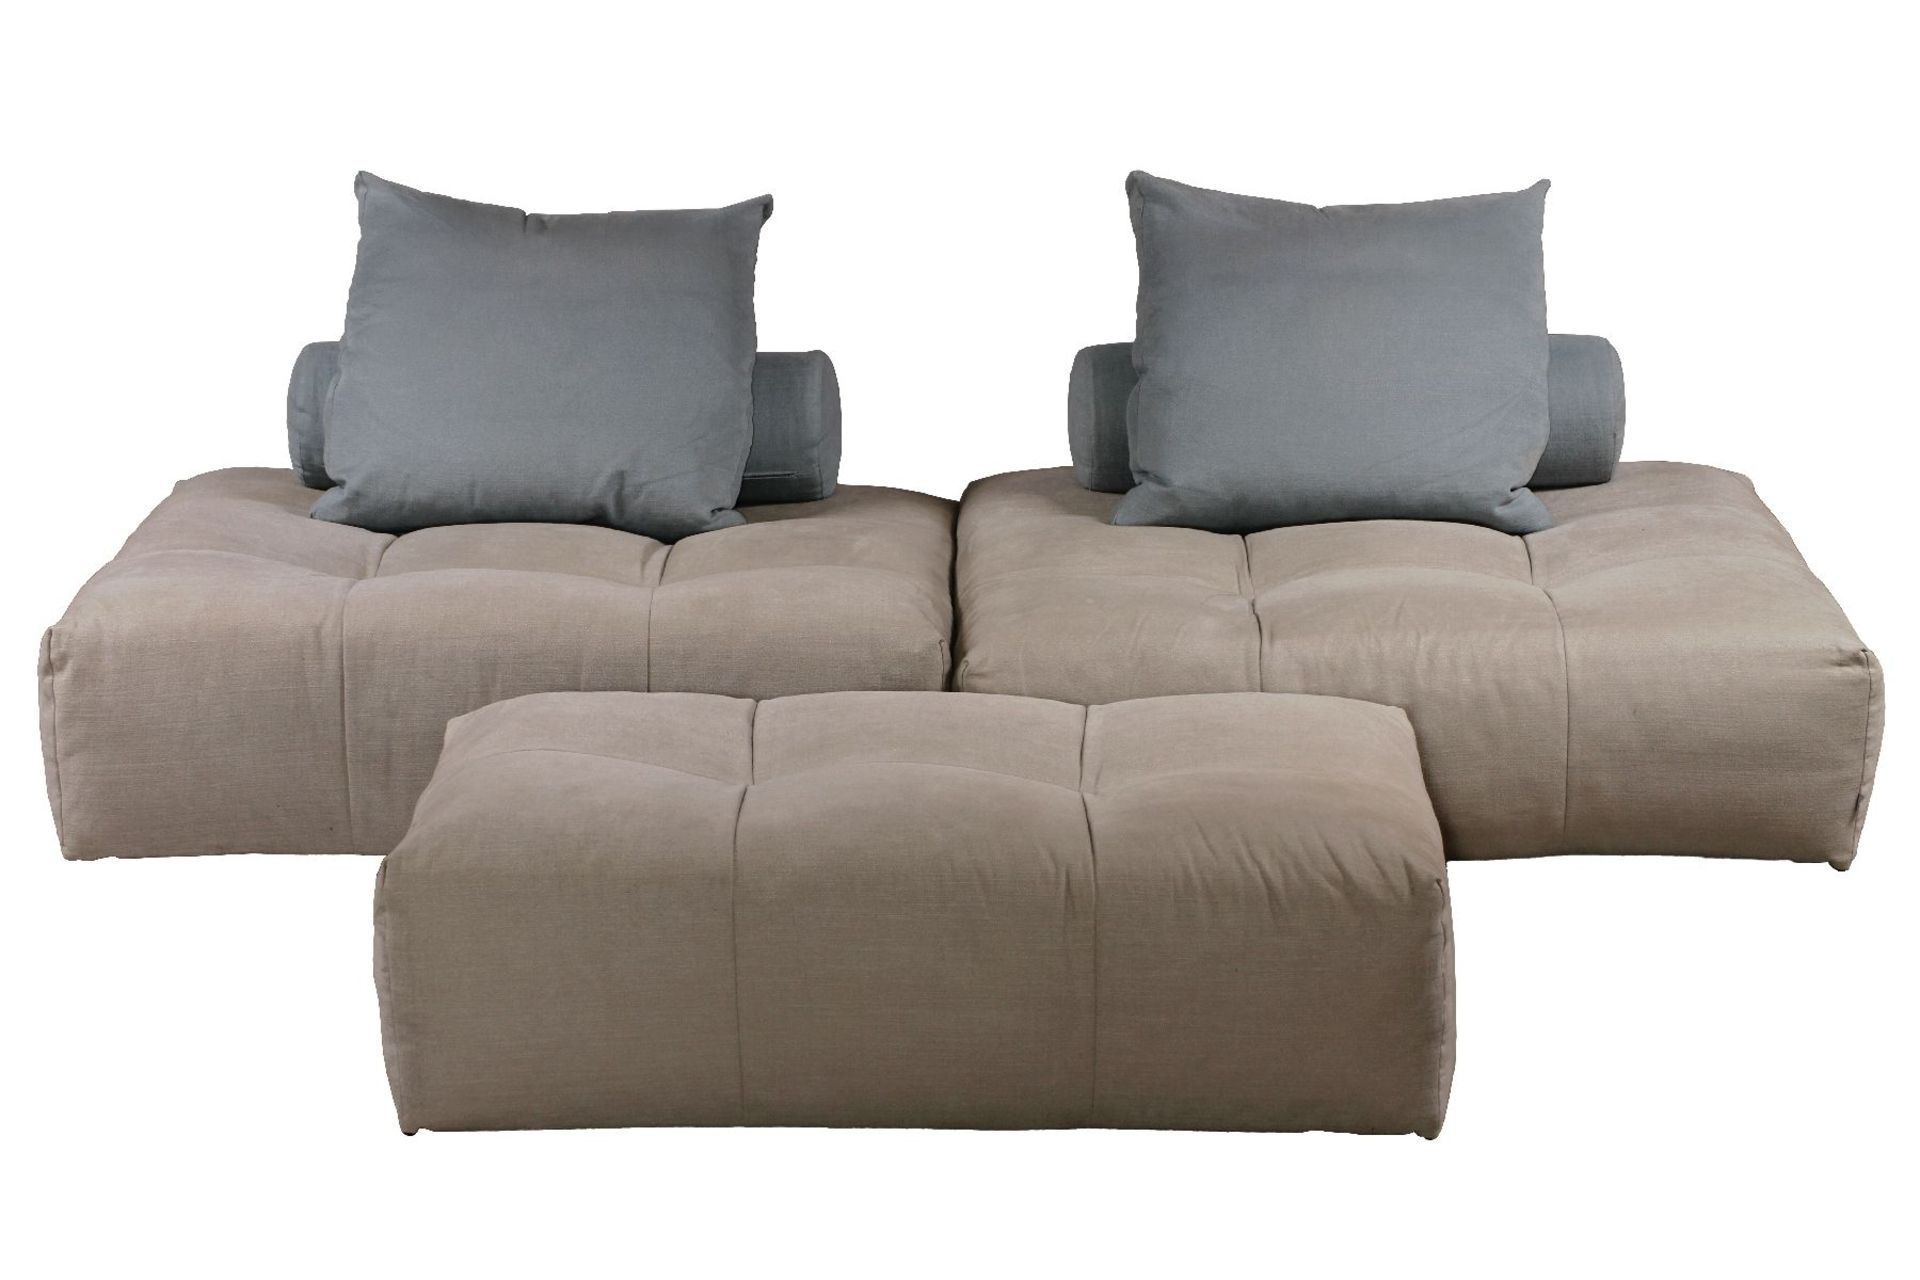 Pixel sofa combination, 3 seat modules, 2x 122x122 cm each, 1x 122x82 cm, 2 cushions withdove-blue